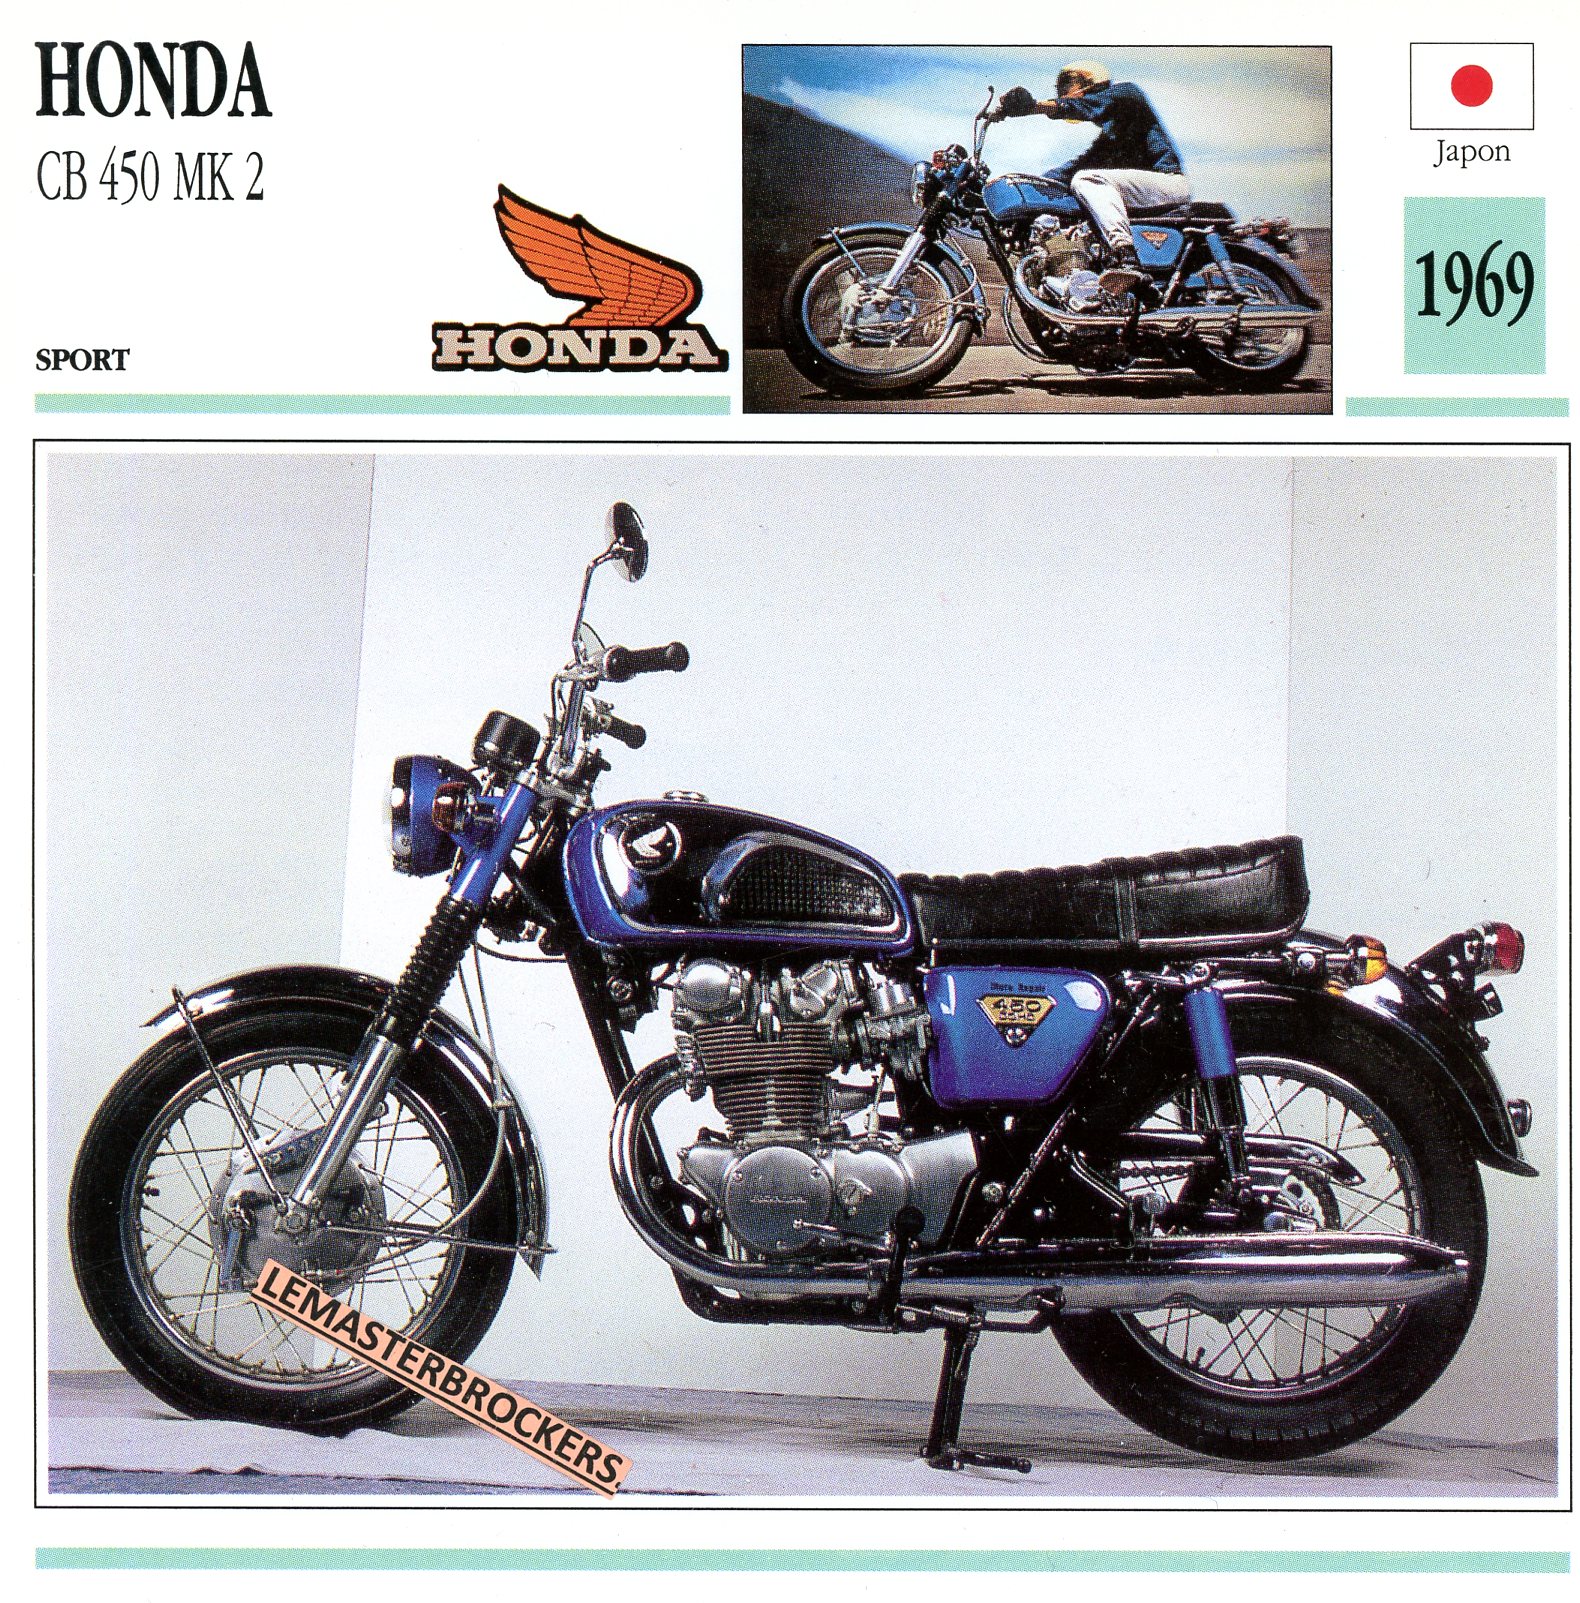 FICHE-MOTO-HONDA-CB-CB450-MK2-1969-LEMASTERBROCKERS-CARS-MOTORCYCLE